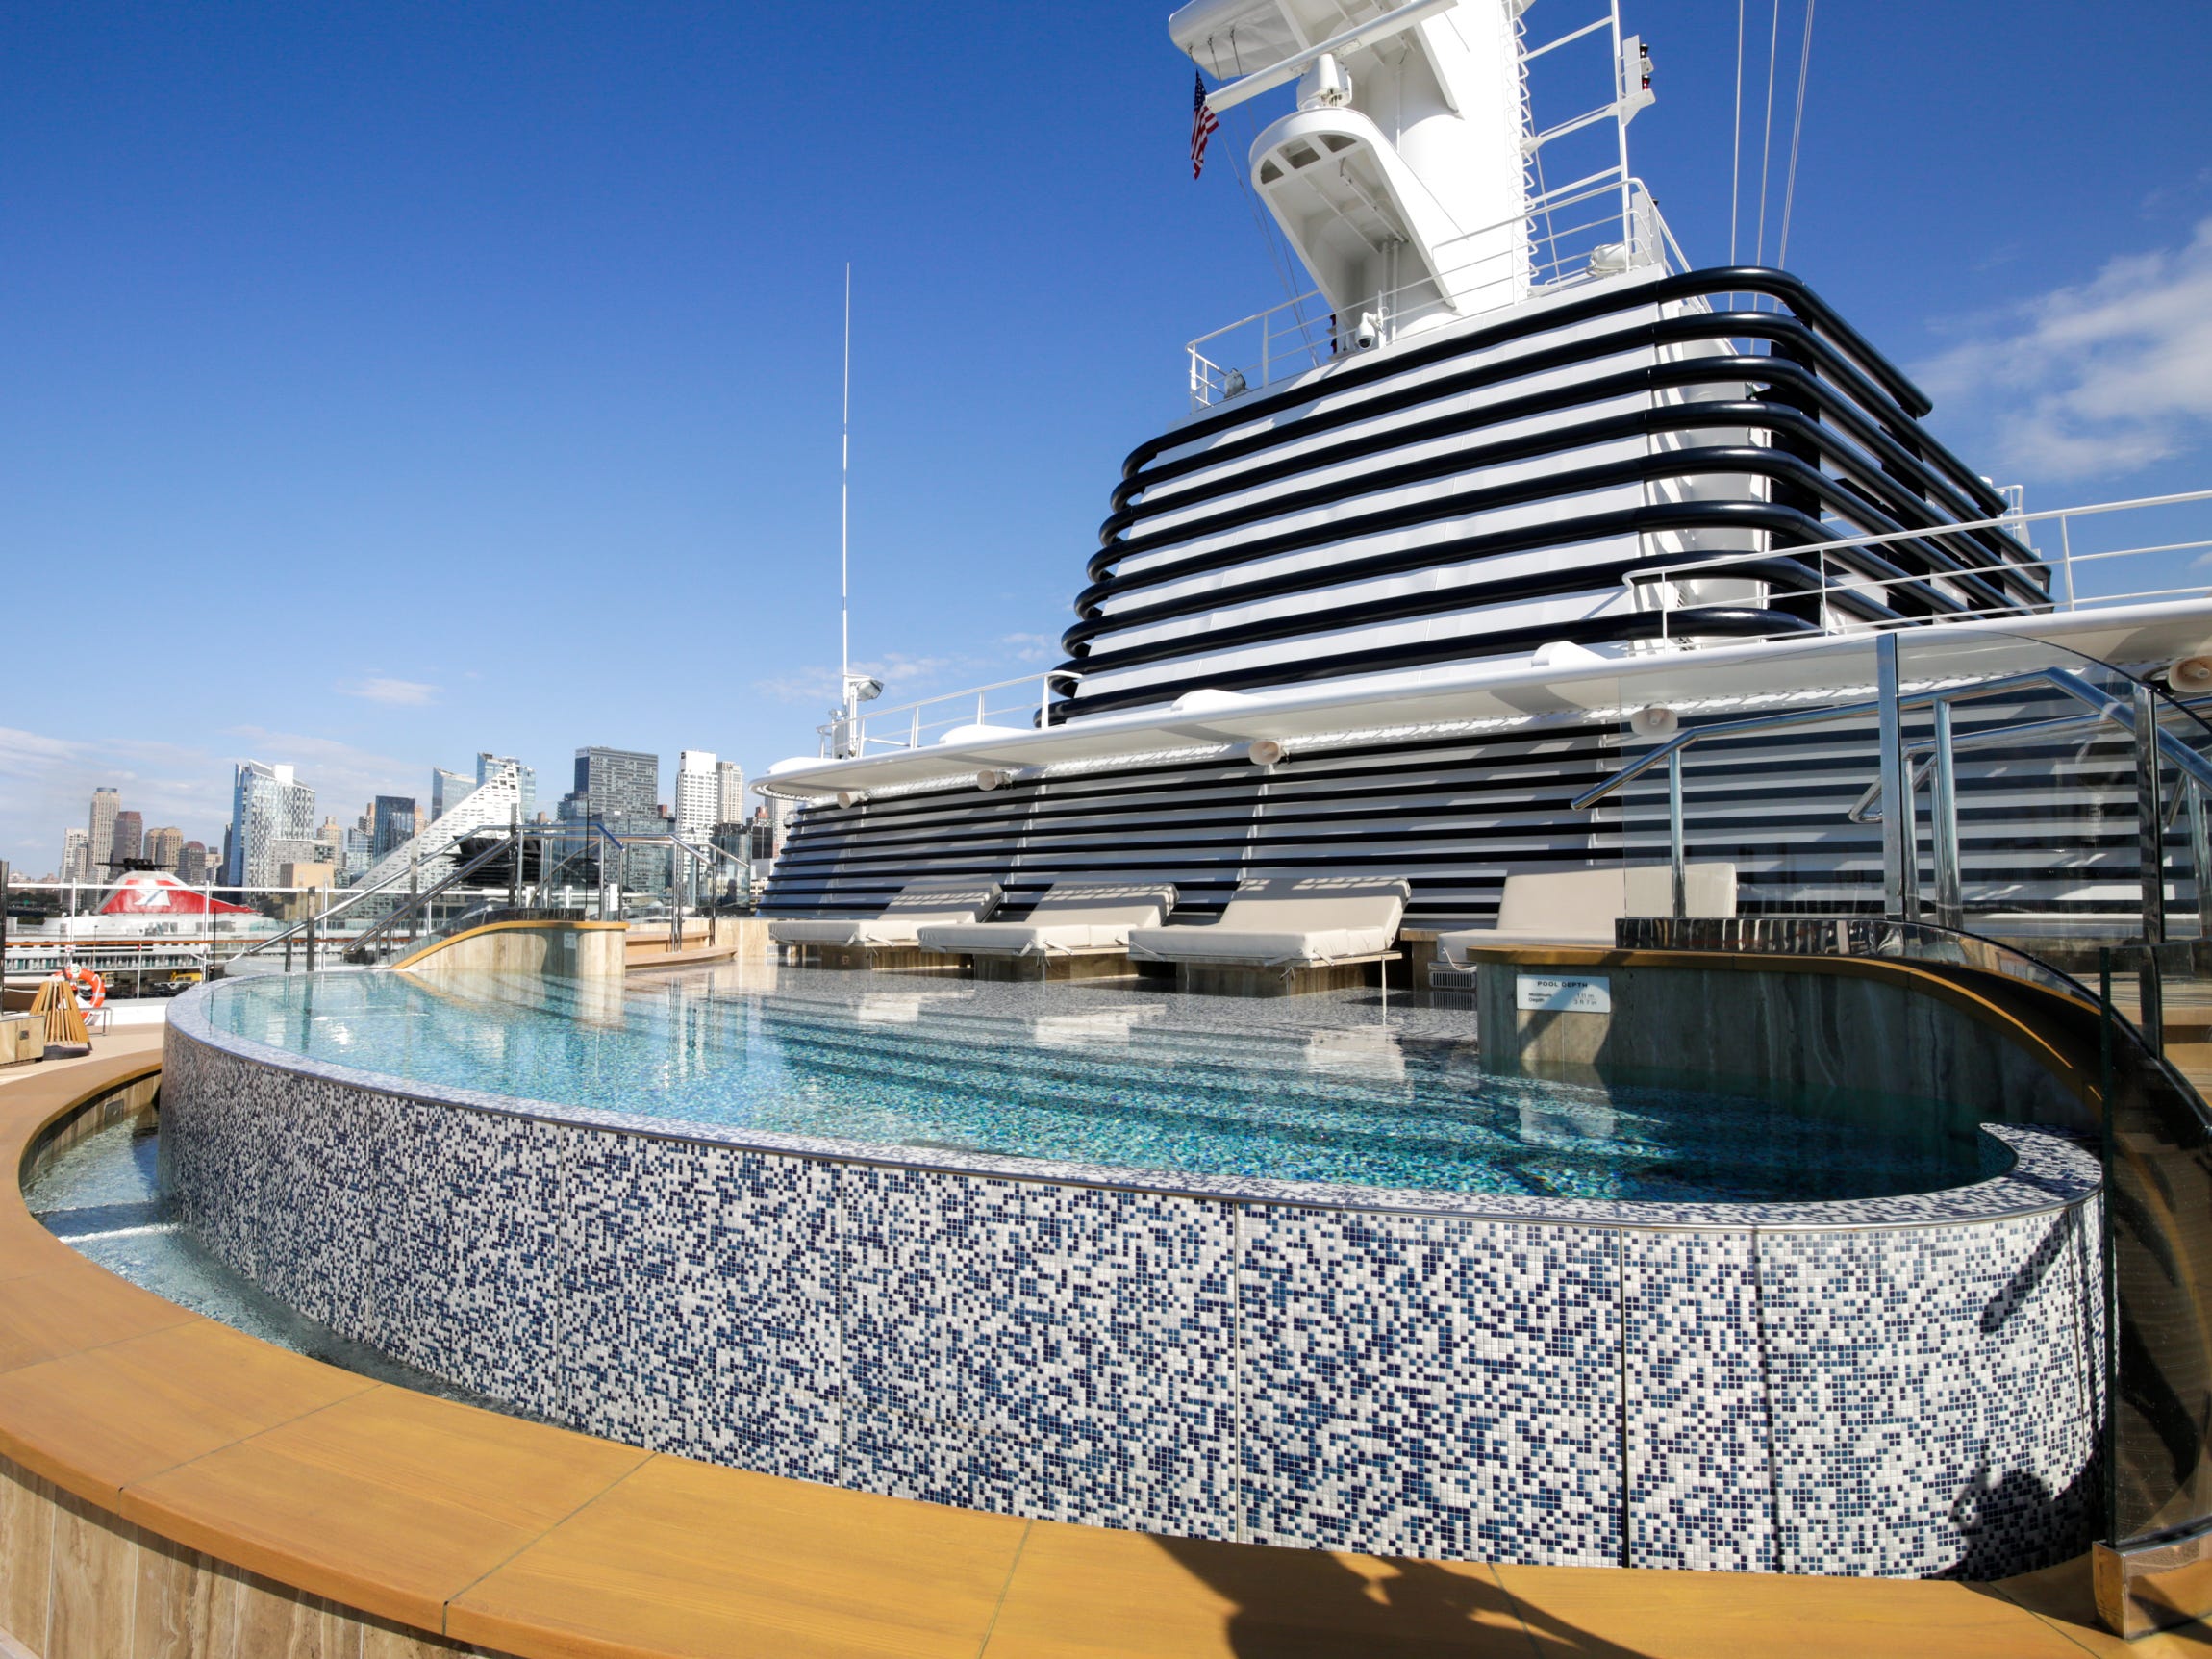 outdoor pool on Explora Journeys' Explora I cruise ship 